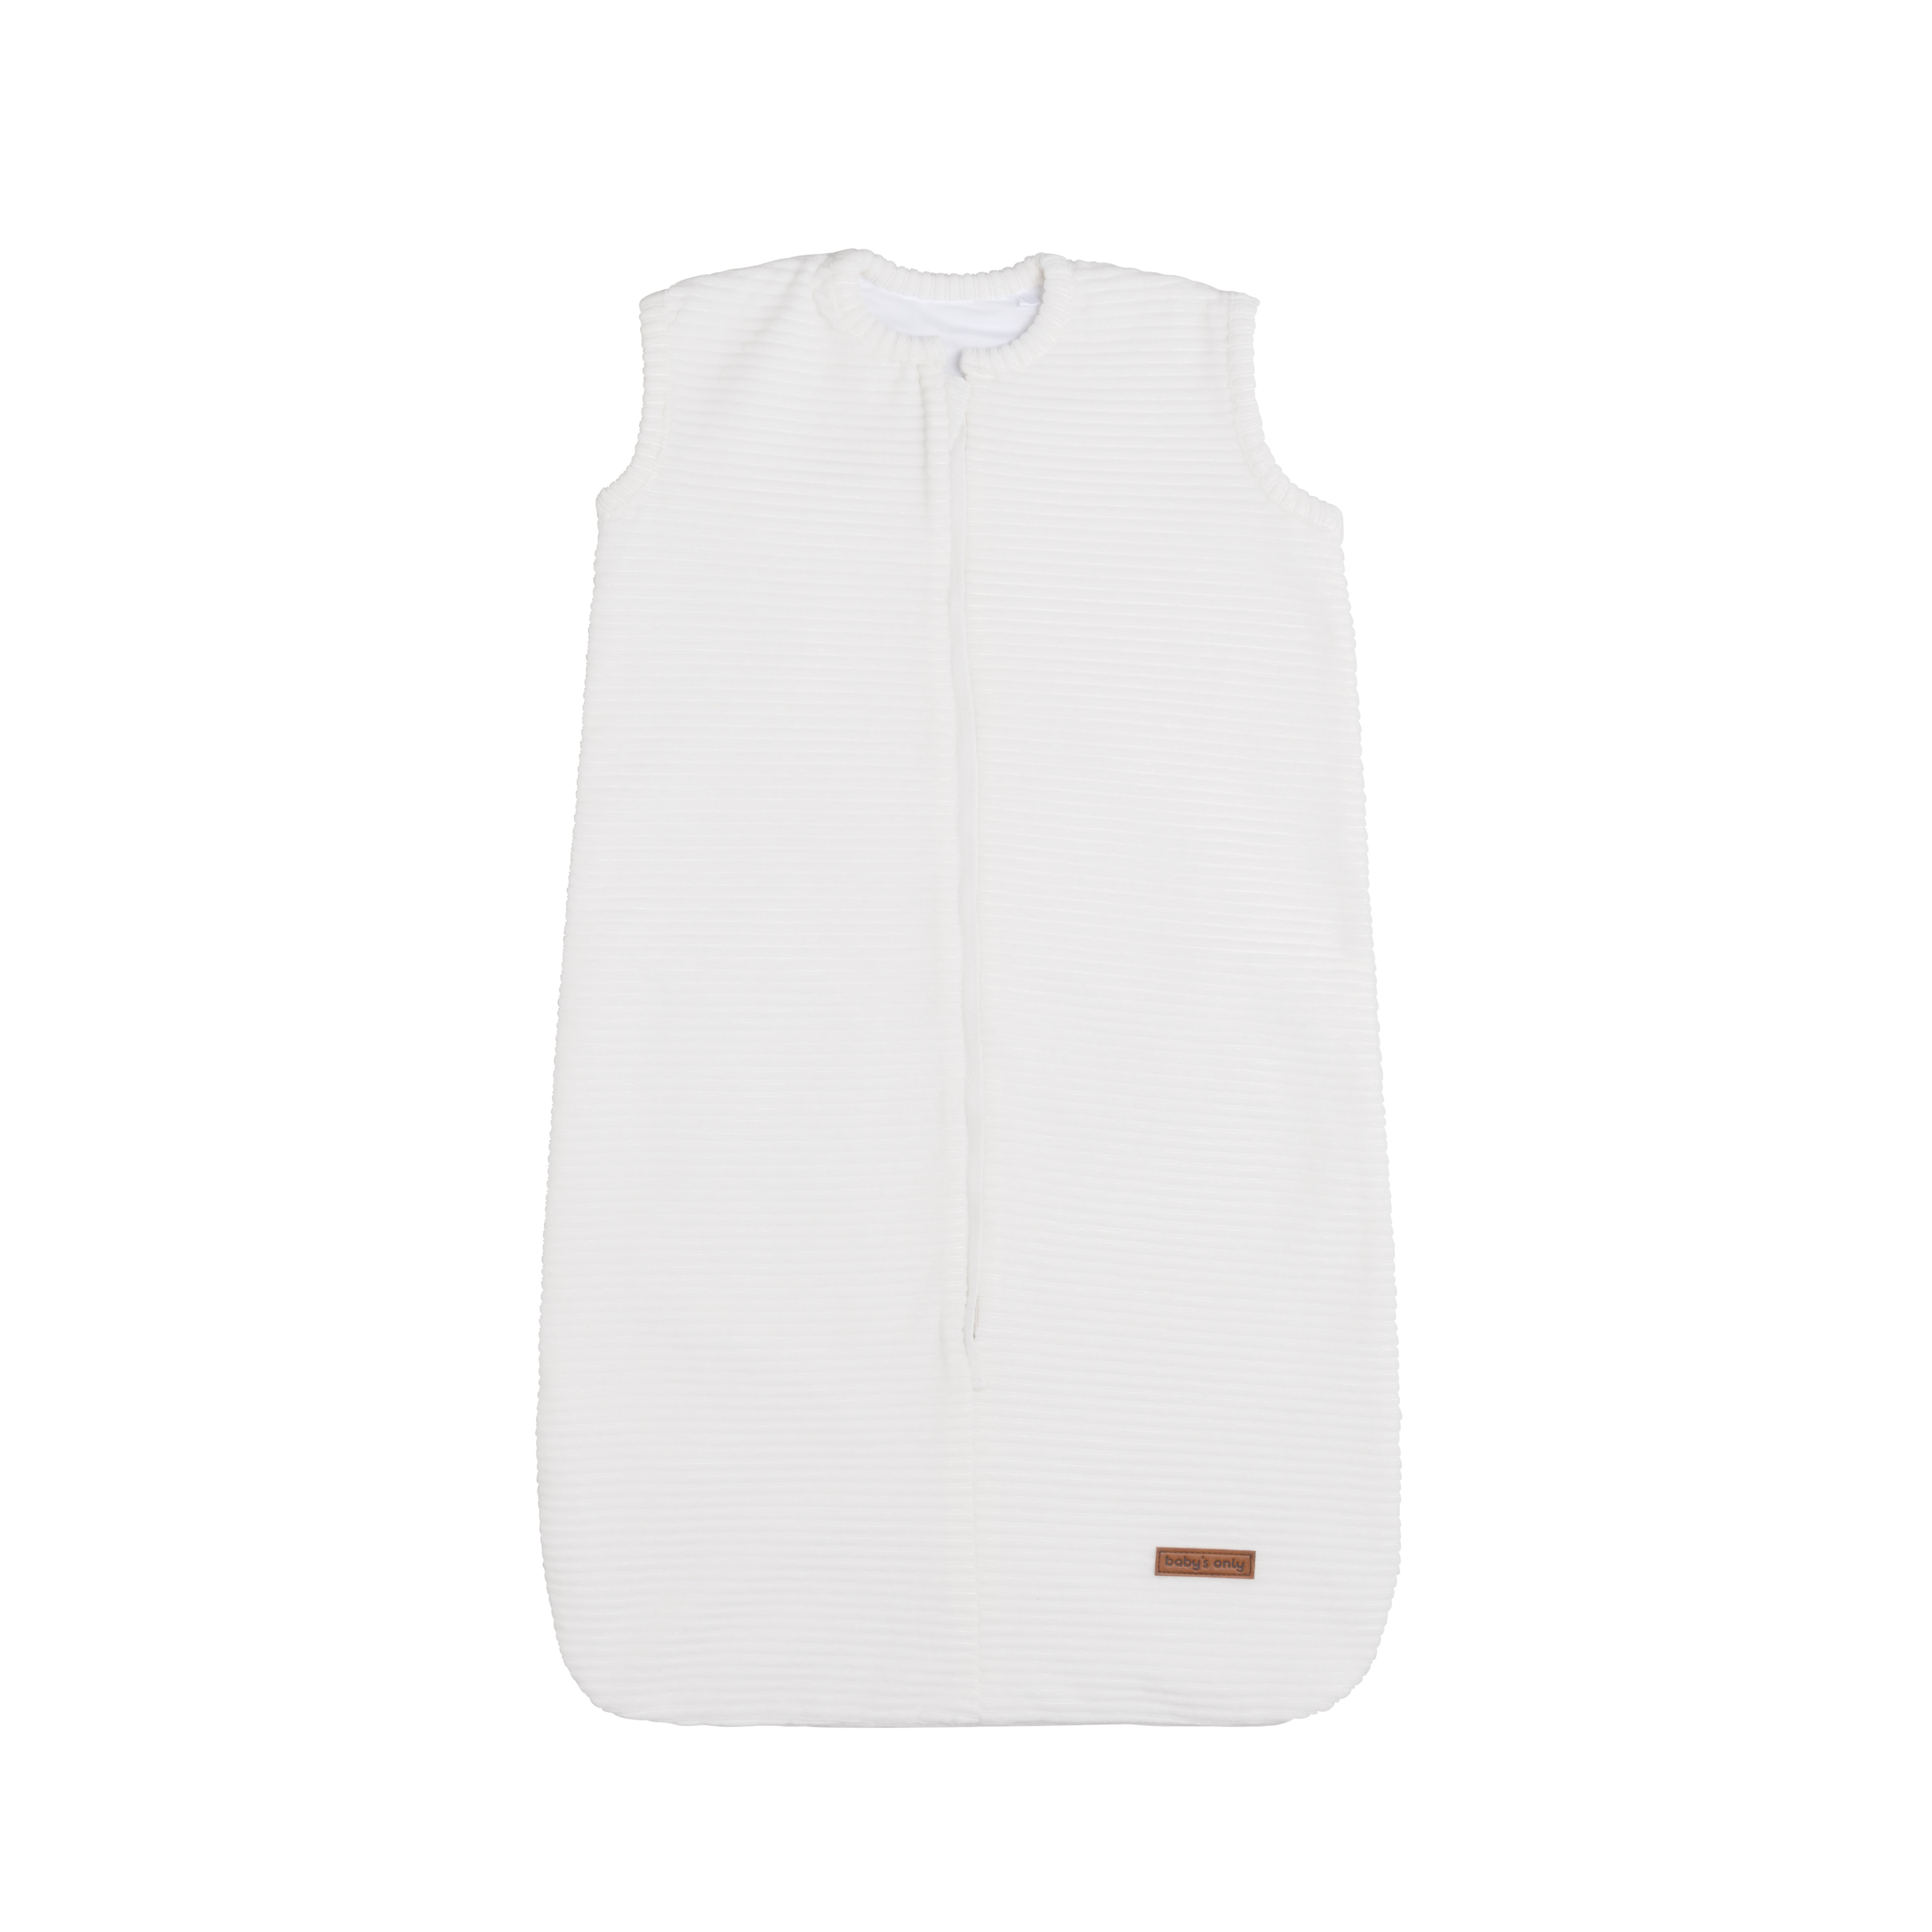 Sleeping bag Sense white - 90 cm